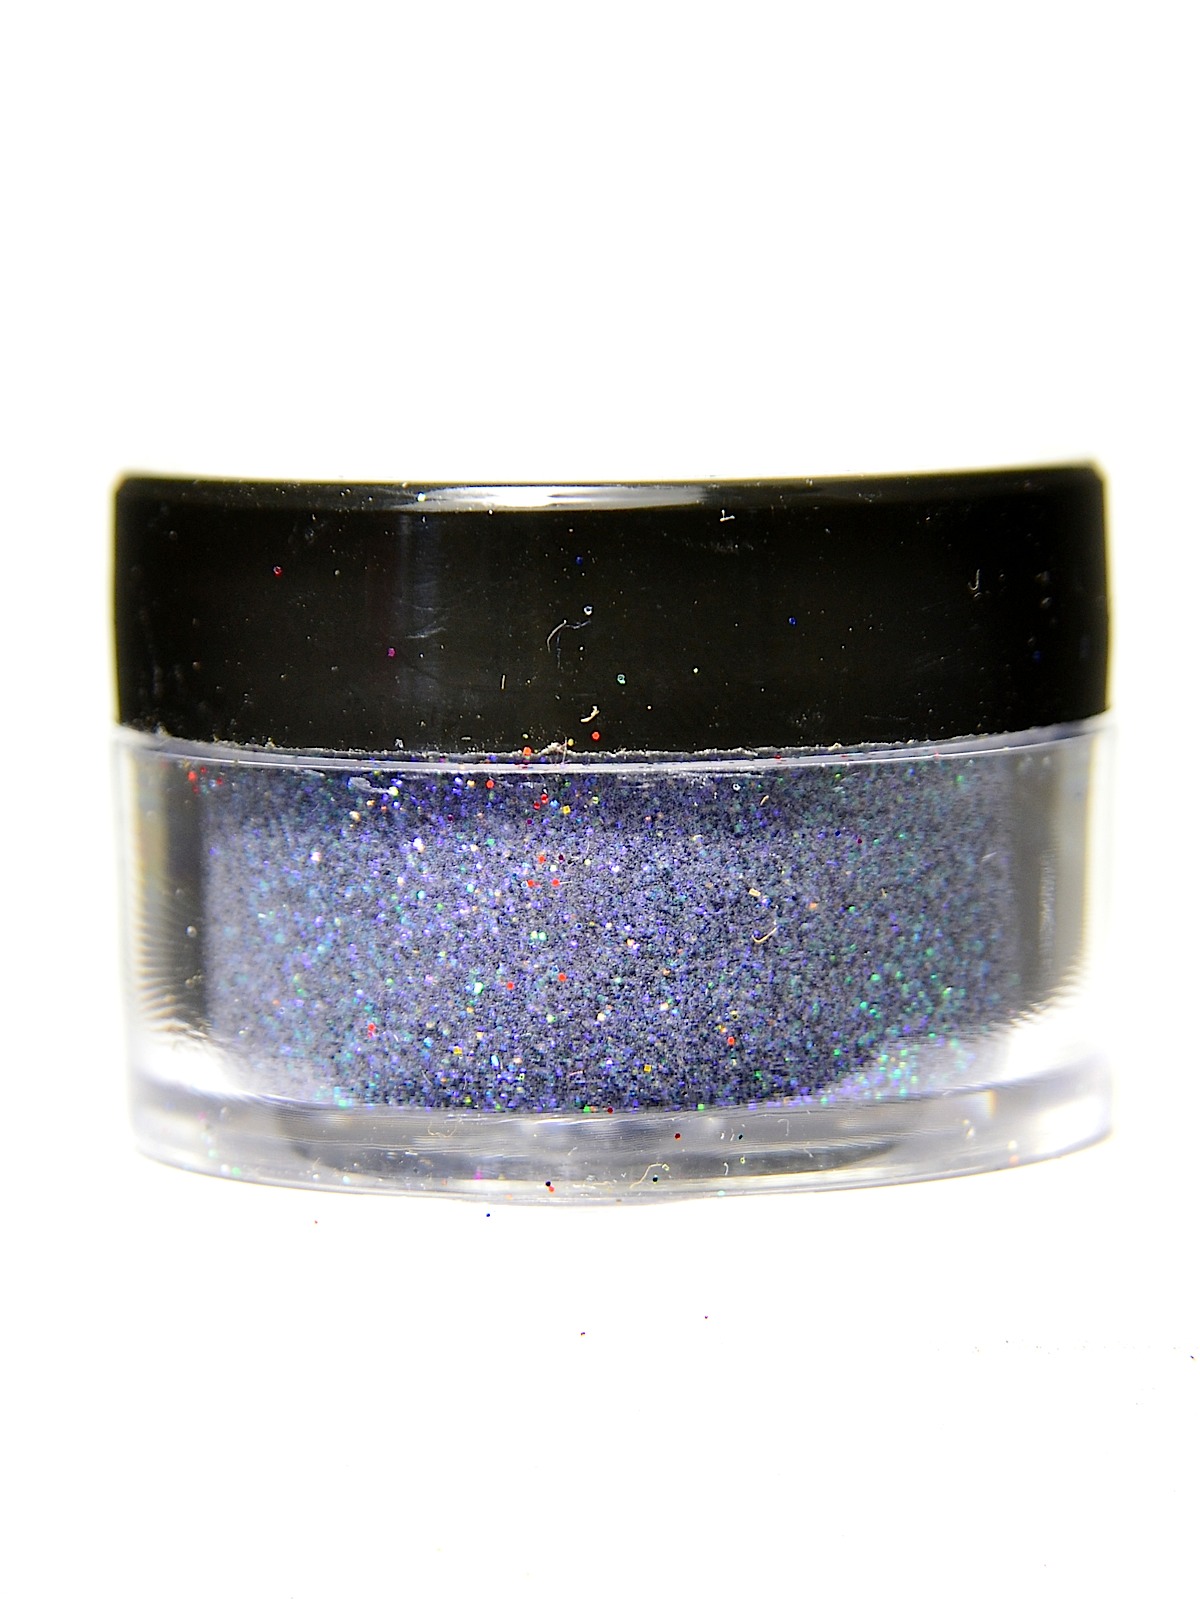 Ultrafine Transparent Glitter Calypso 1 2 Oz. Jar